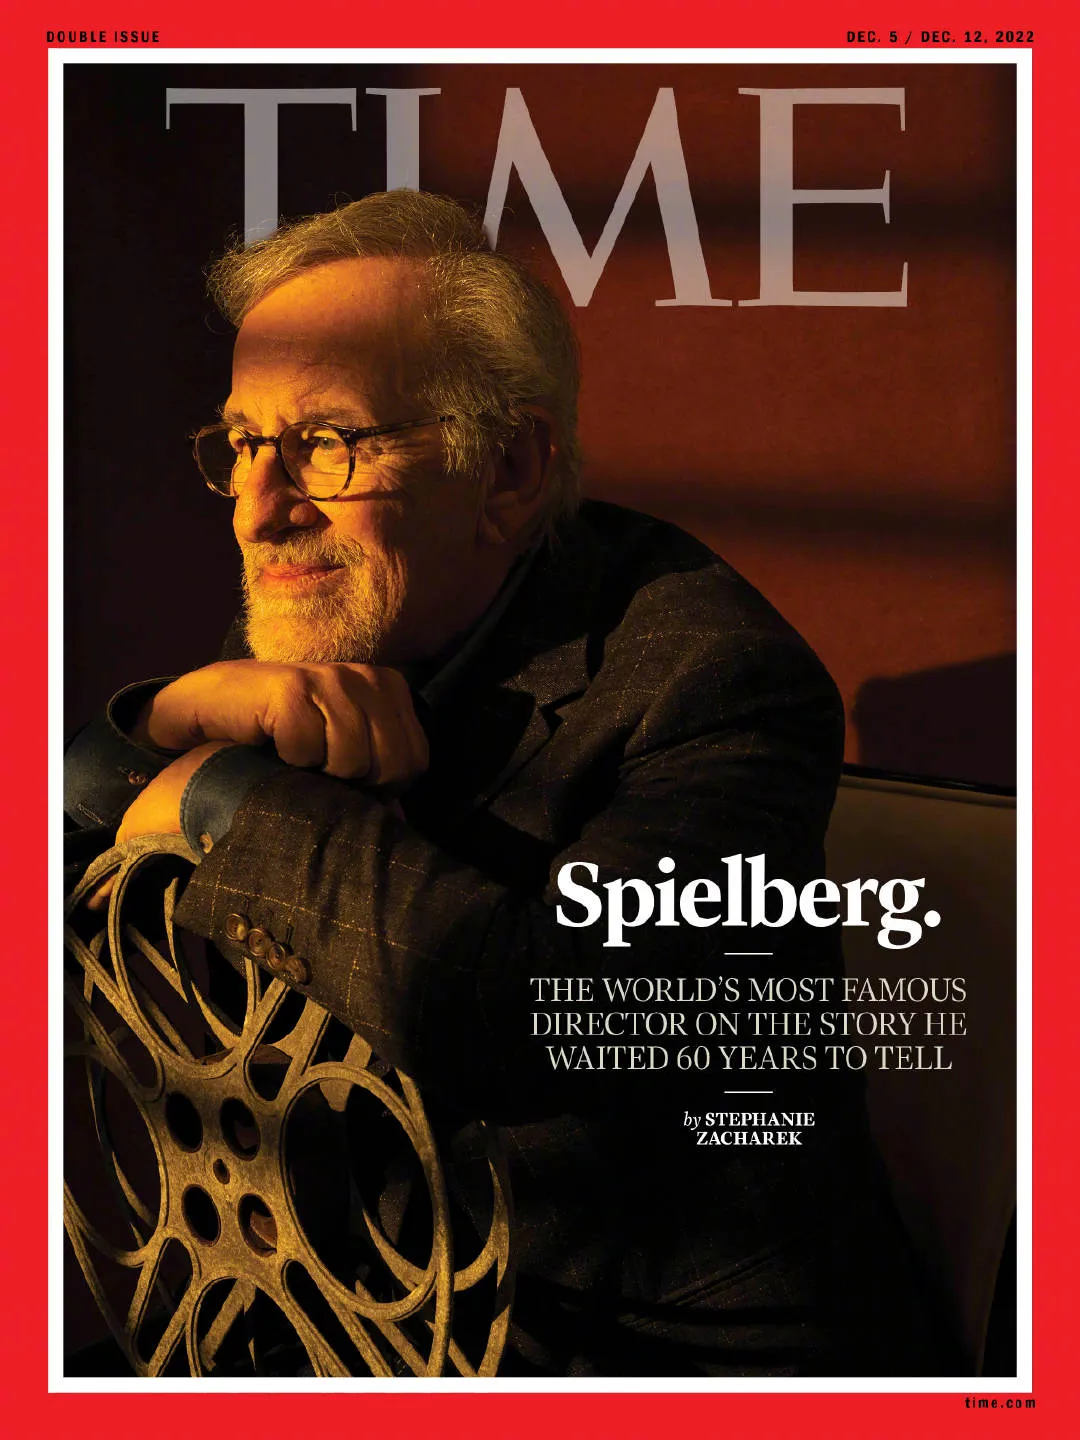 Steven Spielberg, new photo for 'Time' magazine | FMV6